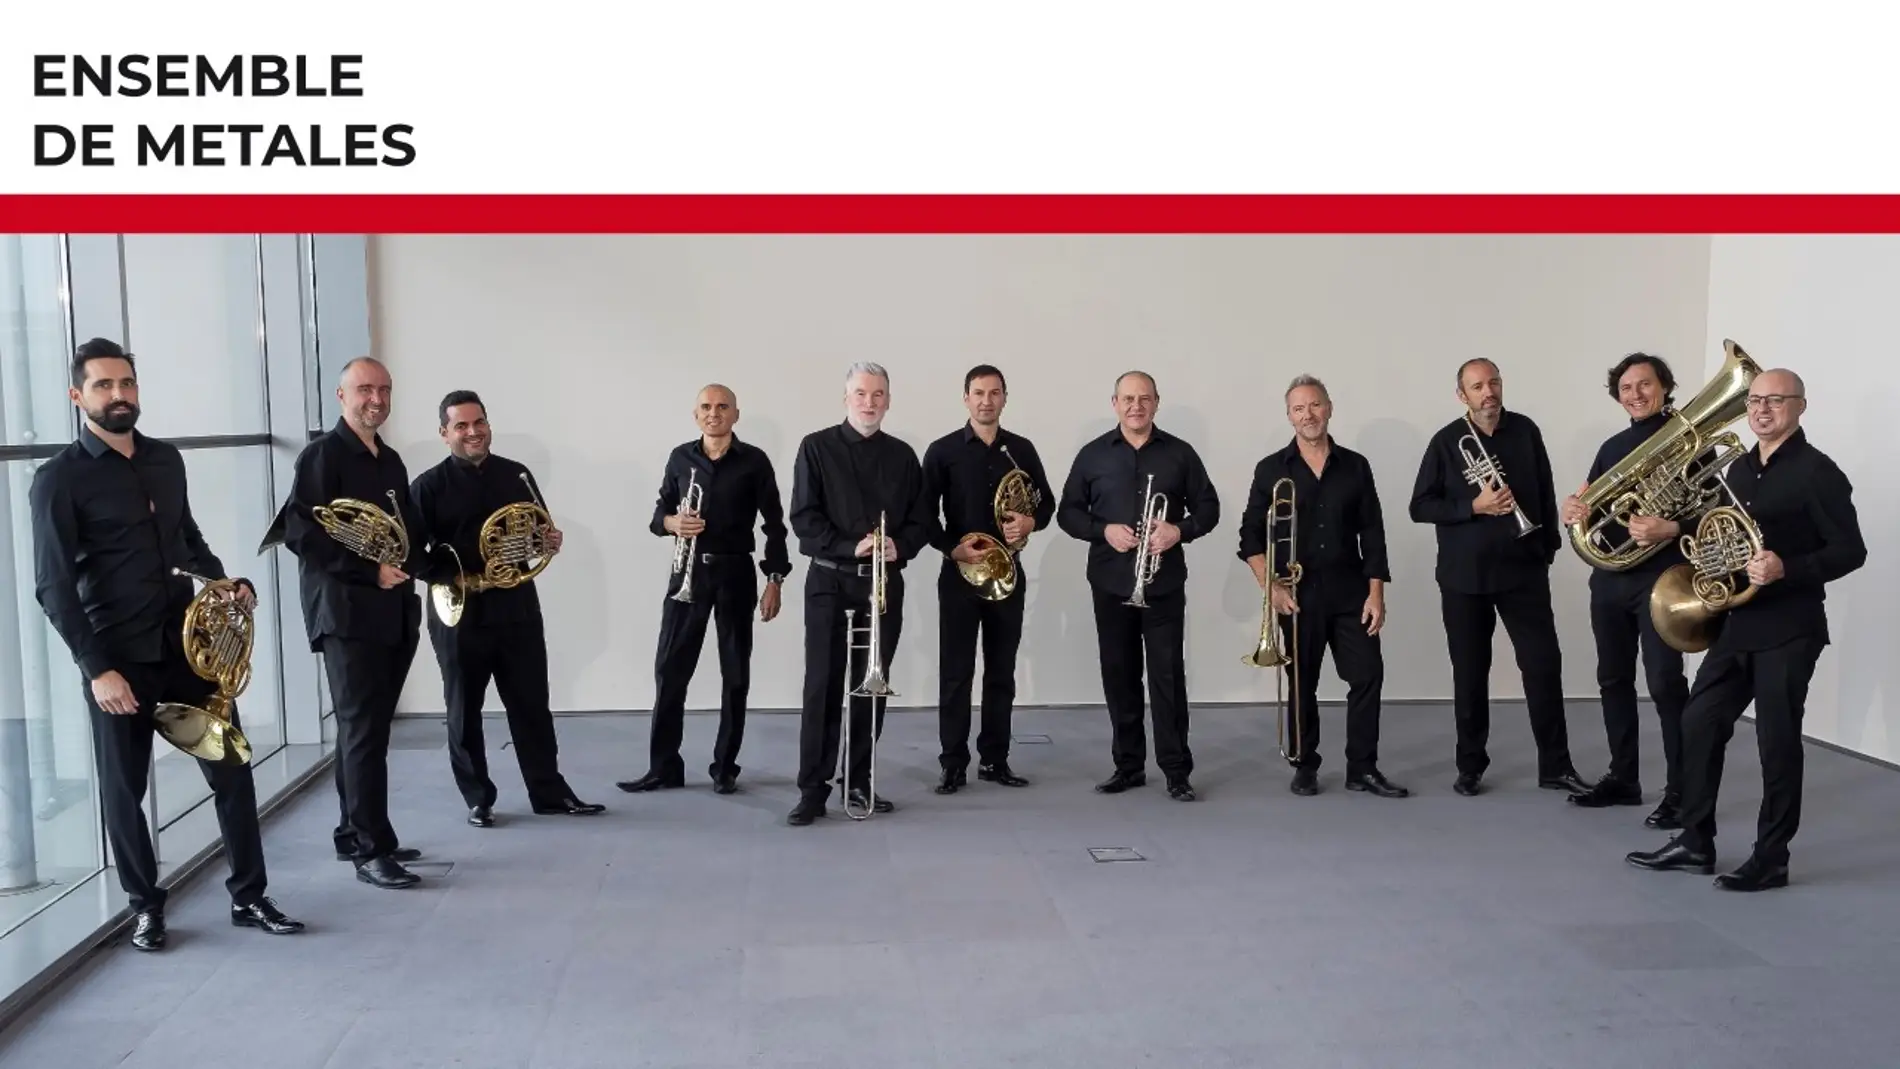 El Ensemble de Metales de la OSCyL acerca la gira 'La Sinfónica cerca de ti' a Palencia mañana jueves